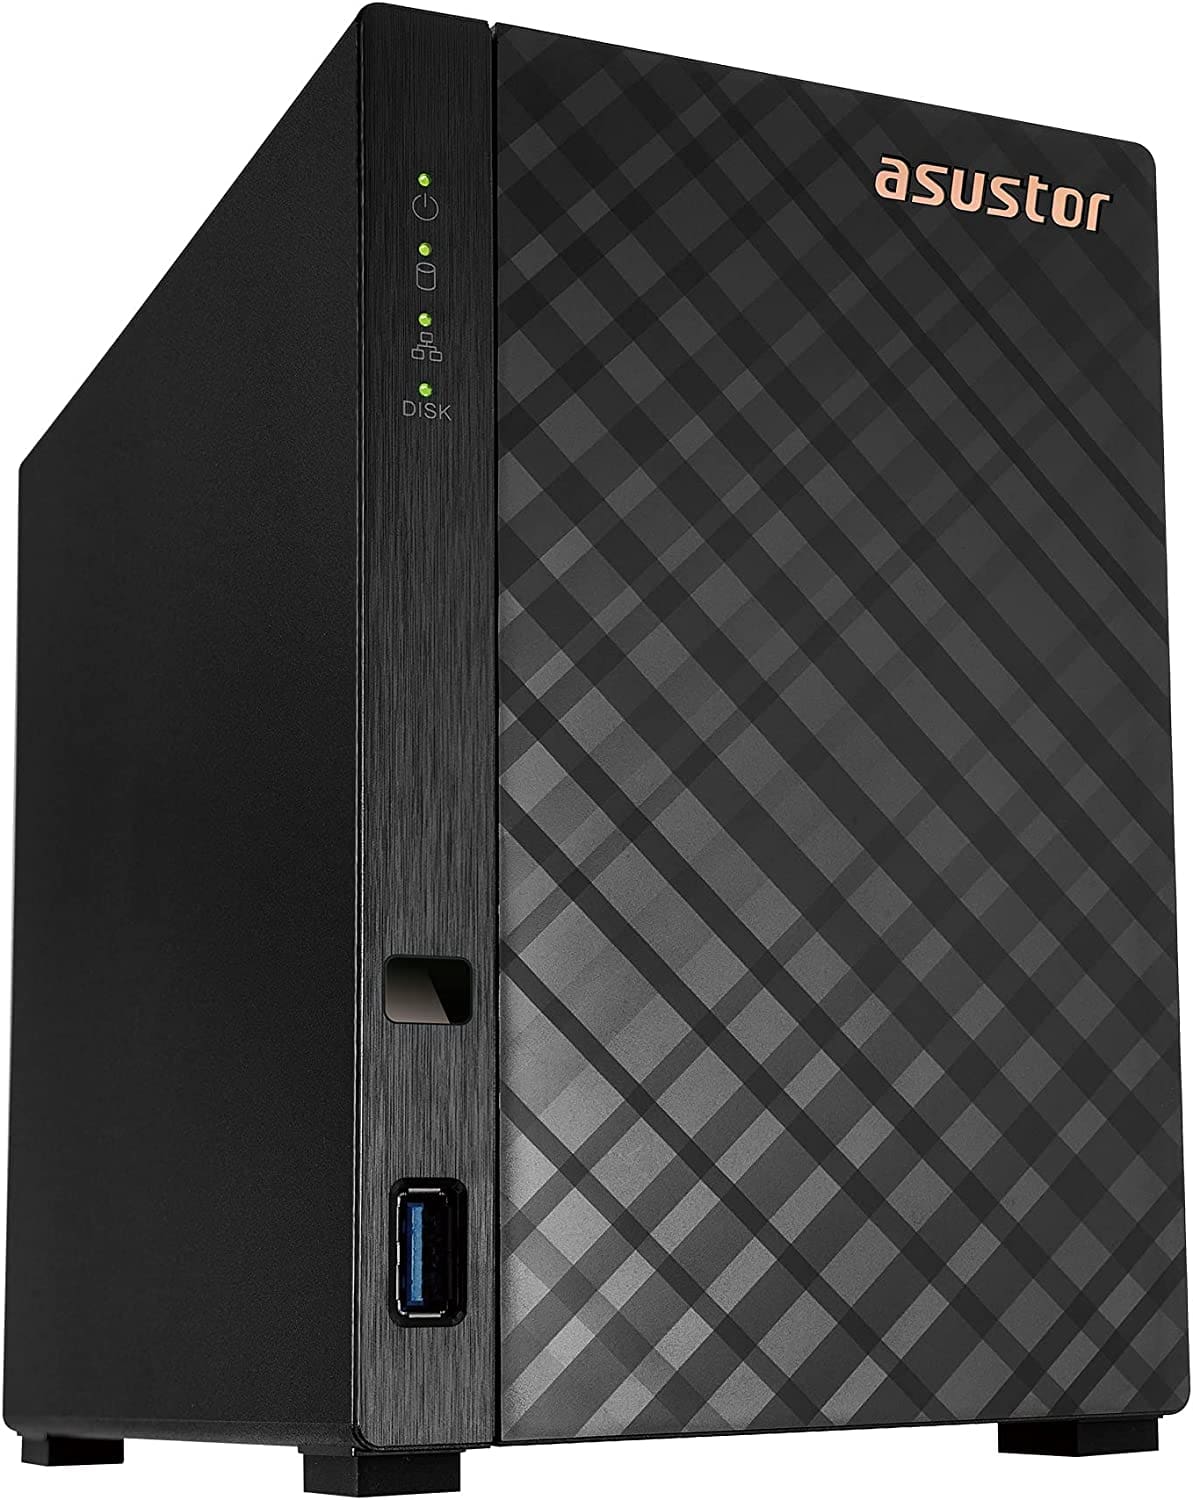 Diskless Asustor Drivestor 2 AS1102T best NAS storage for Mac